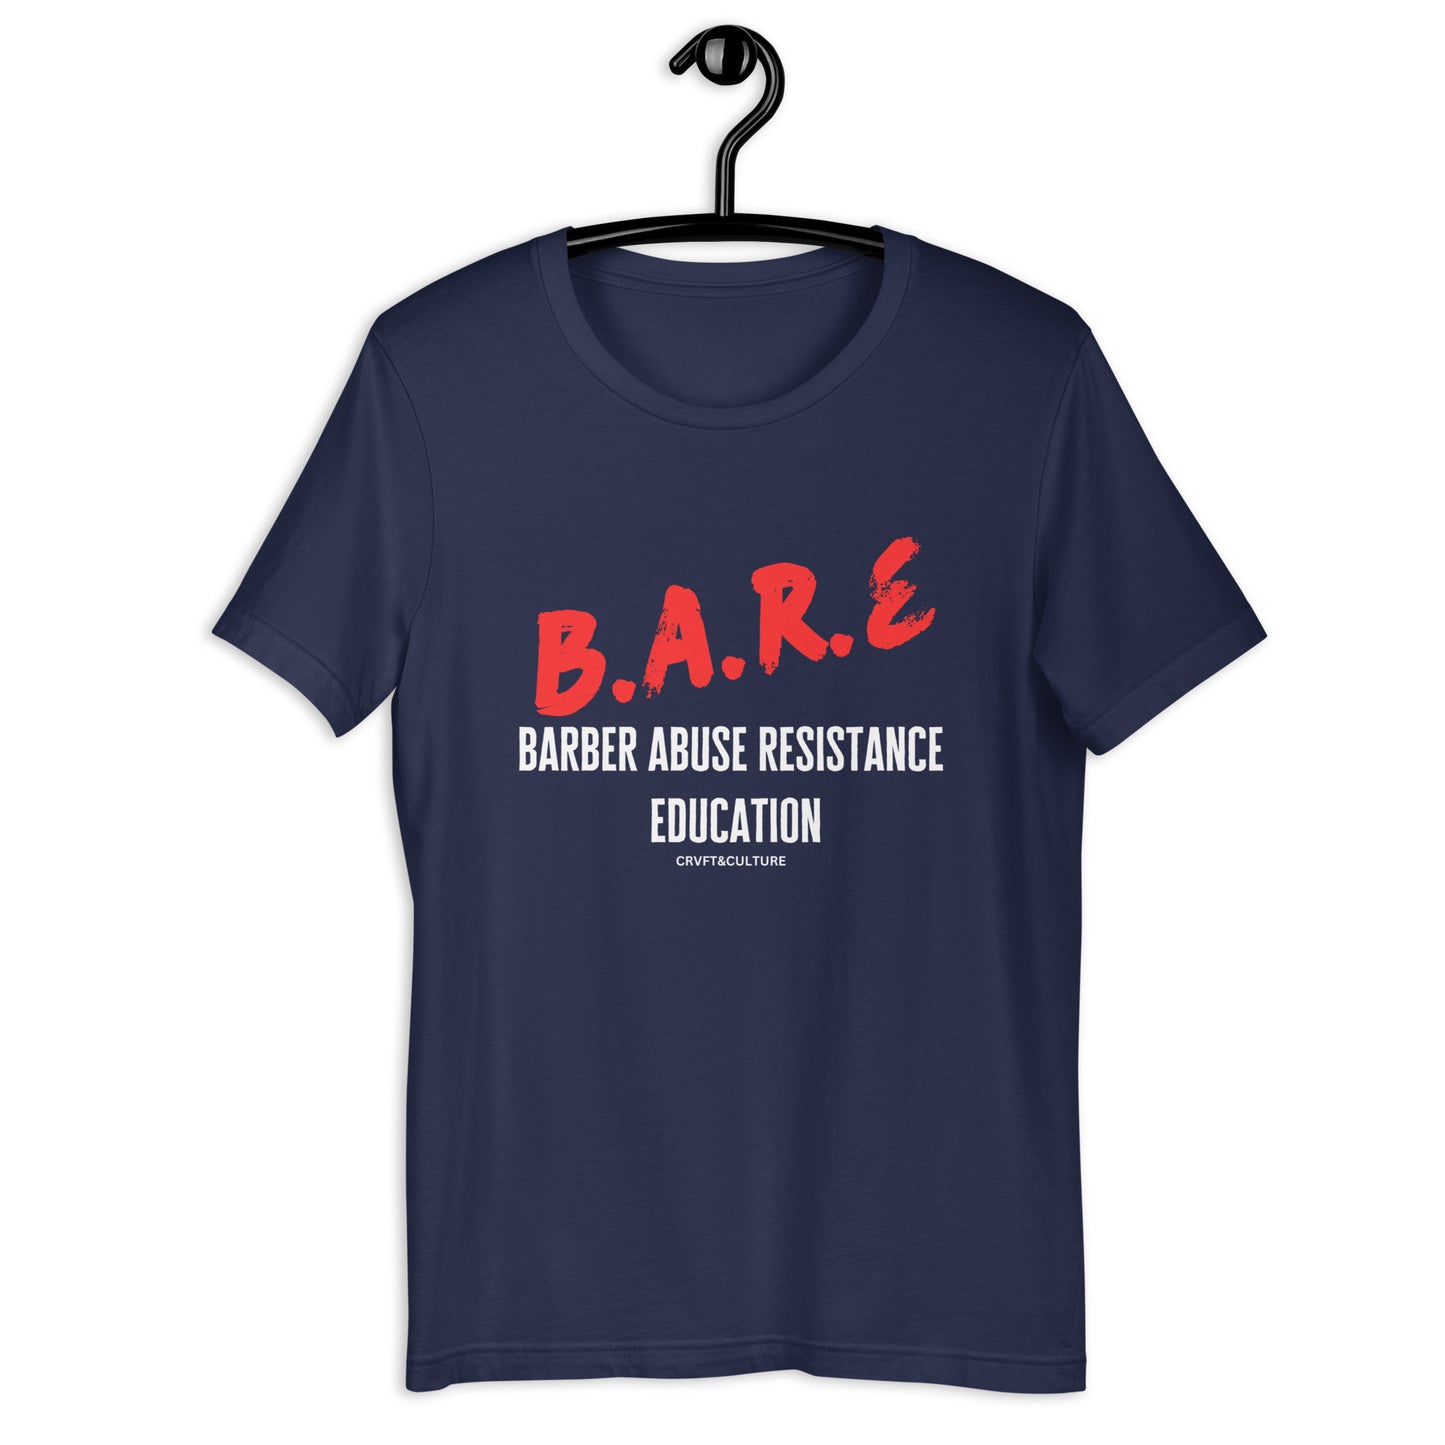 B.A.R.E Barber Abuse Resistance Education